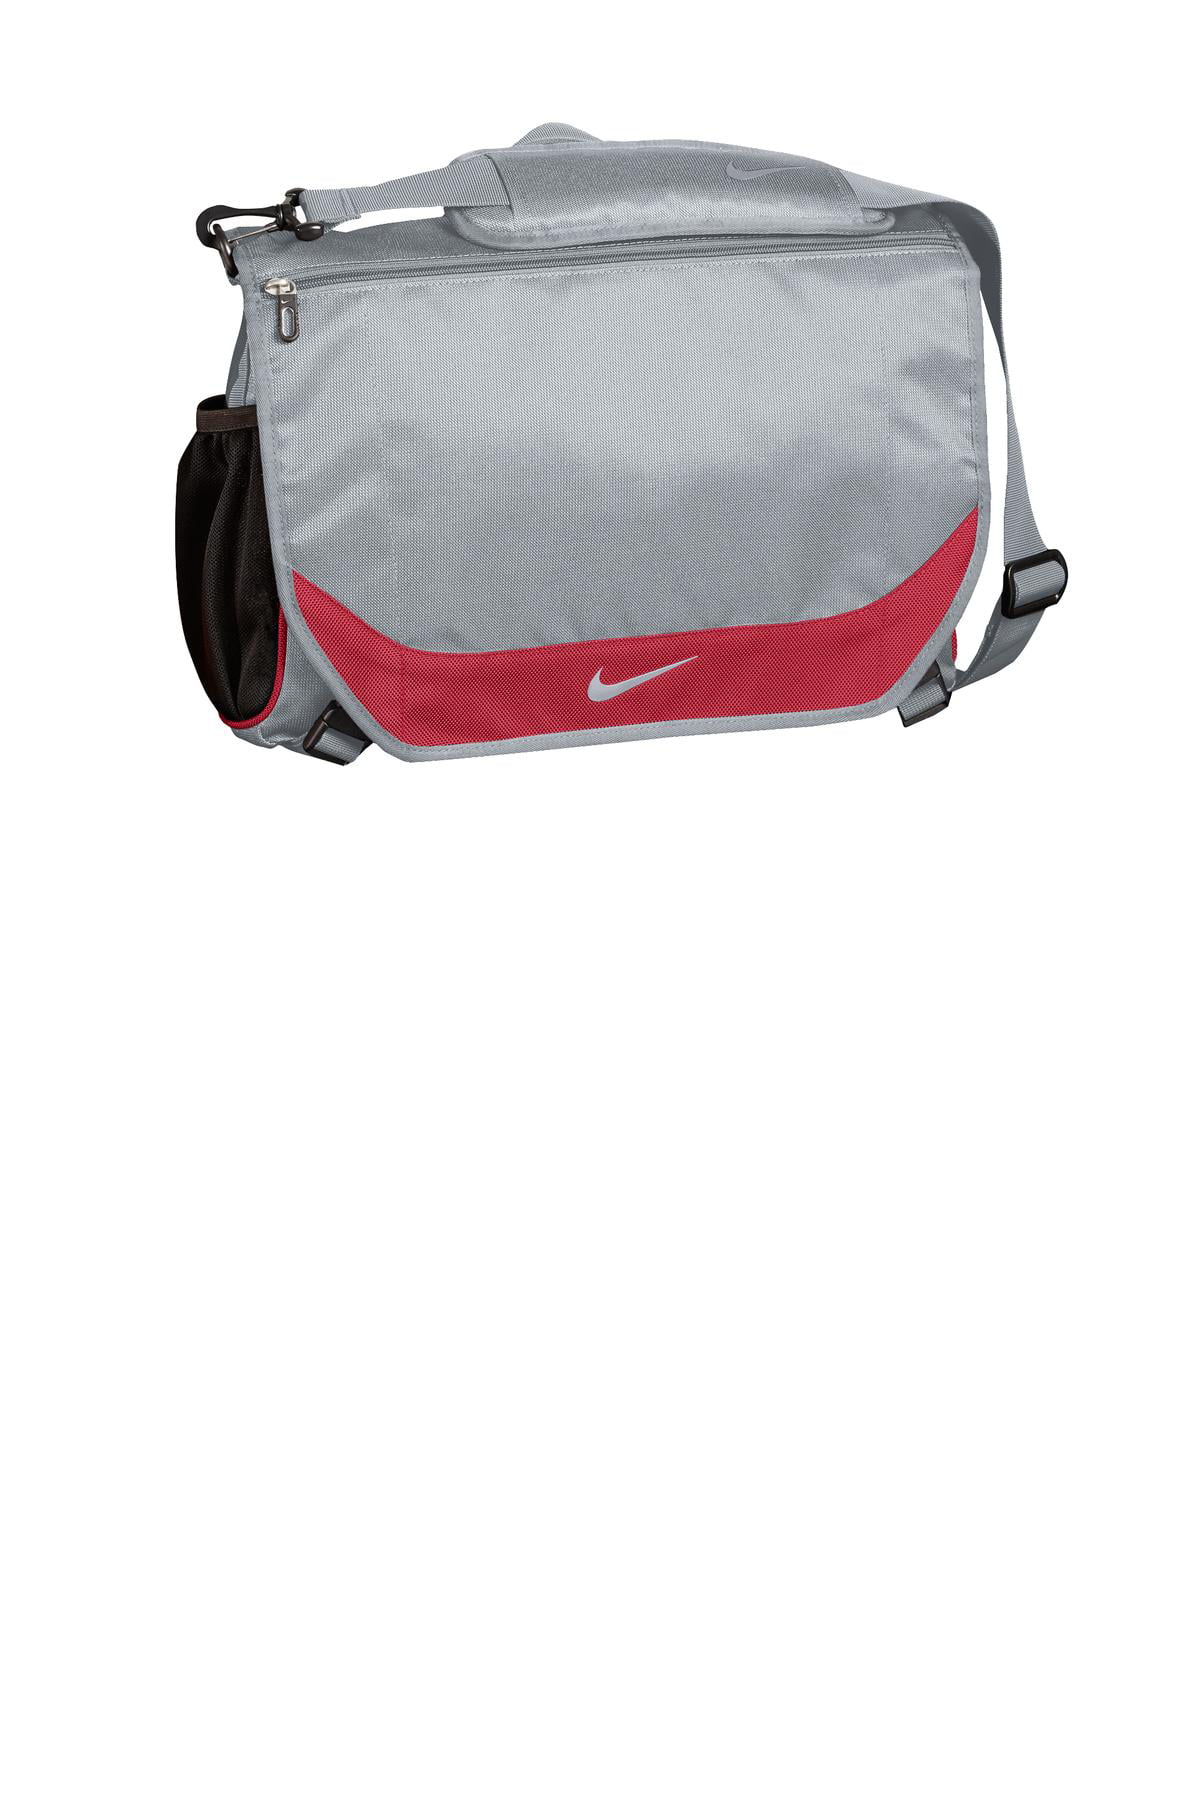 Nike Sportswear NSW Essentials Messenger laptop Shoulder Bag Ironston  DJ9792-004 | eBay